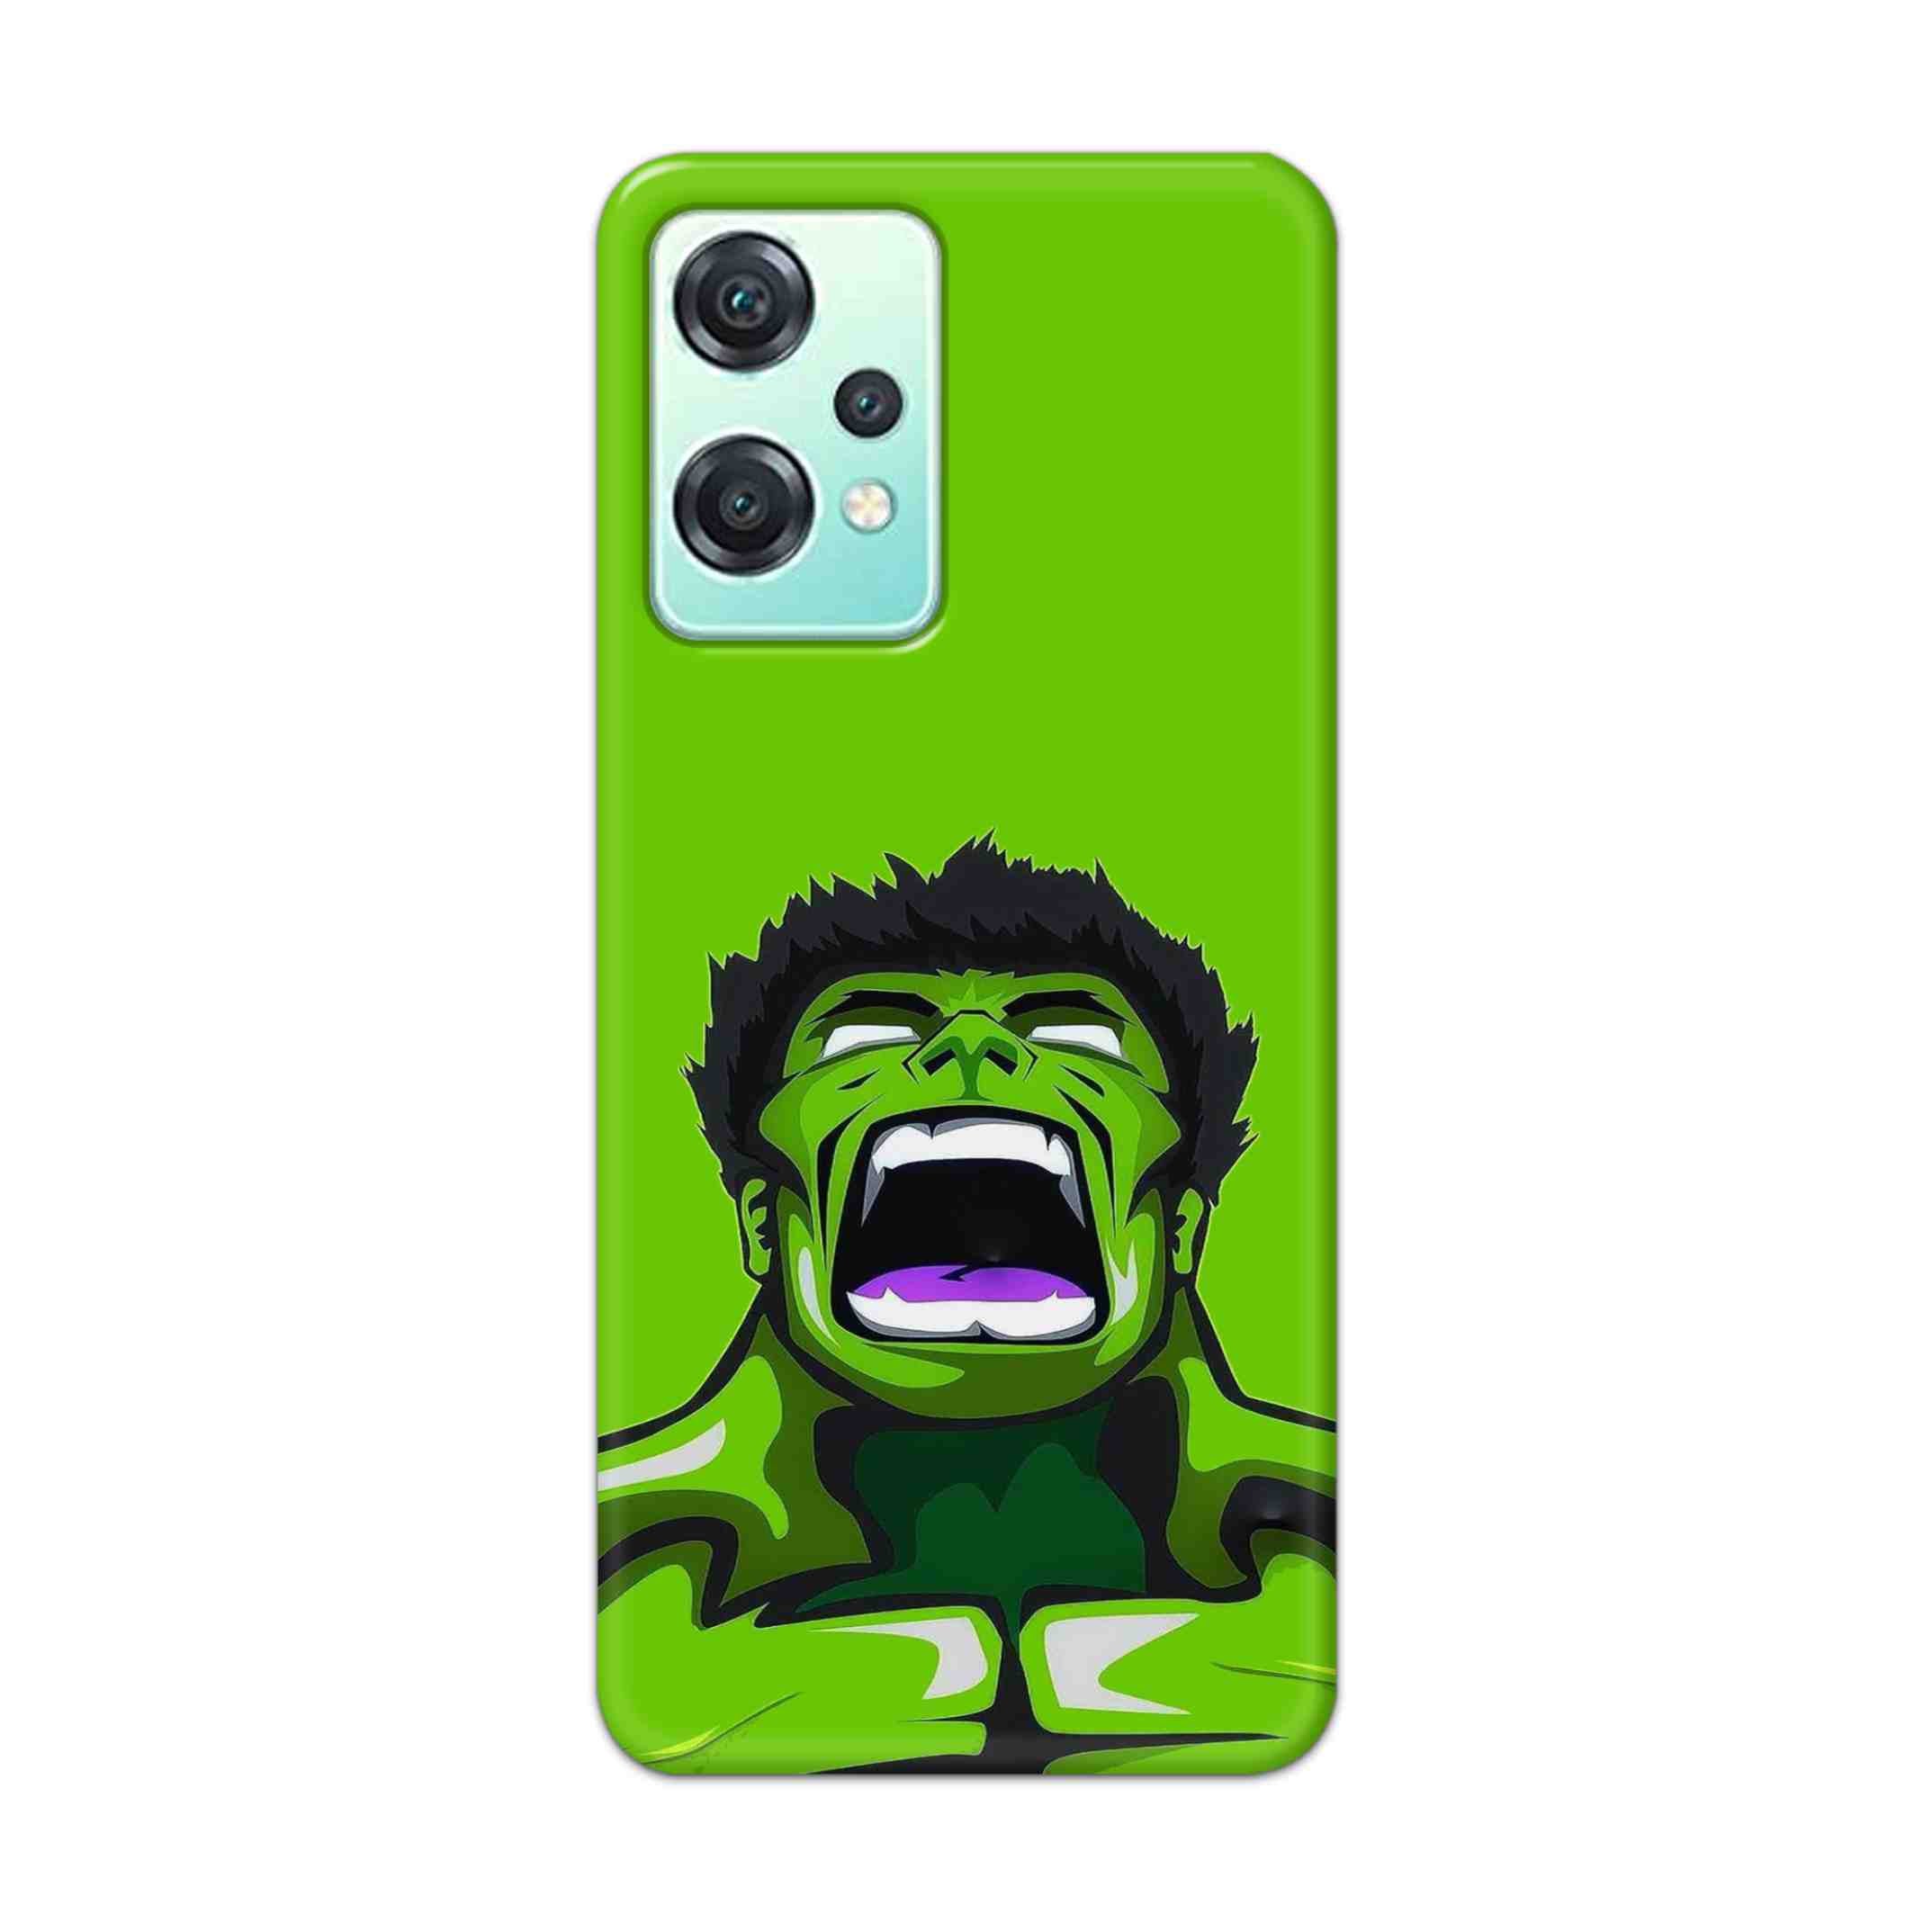 Buy Green Hulk Hard Back Mobile Phone Case Cover For OnePlus Nord CE 2 Lite 5G Online